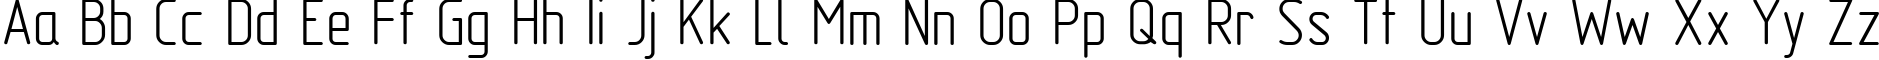 Пример написания английского алфавита шрифтом GOST type A